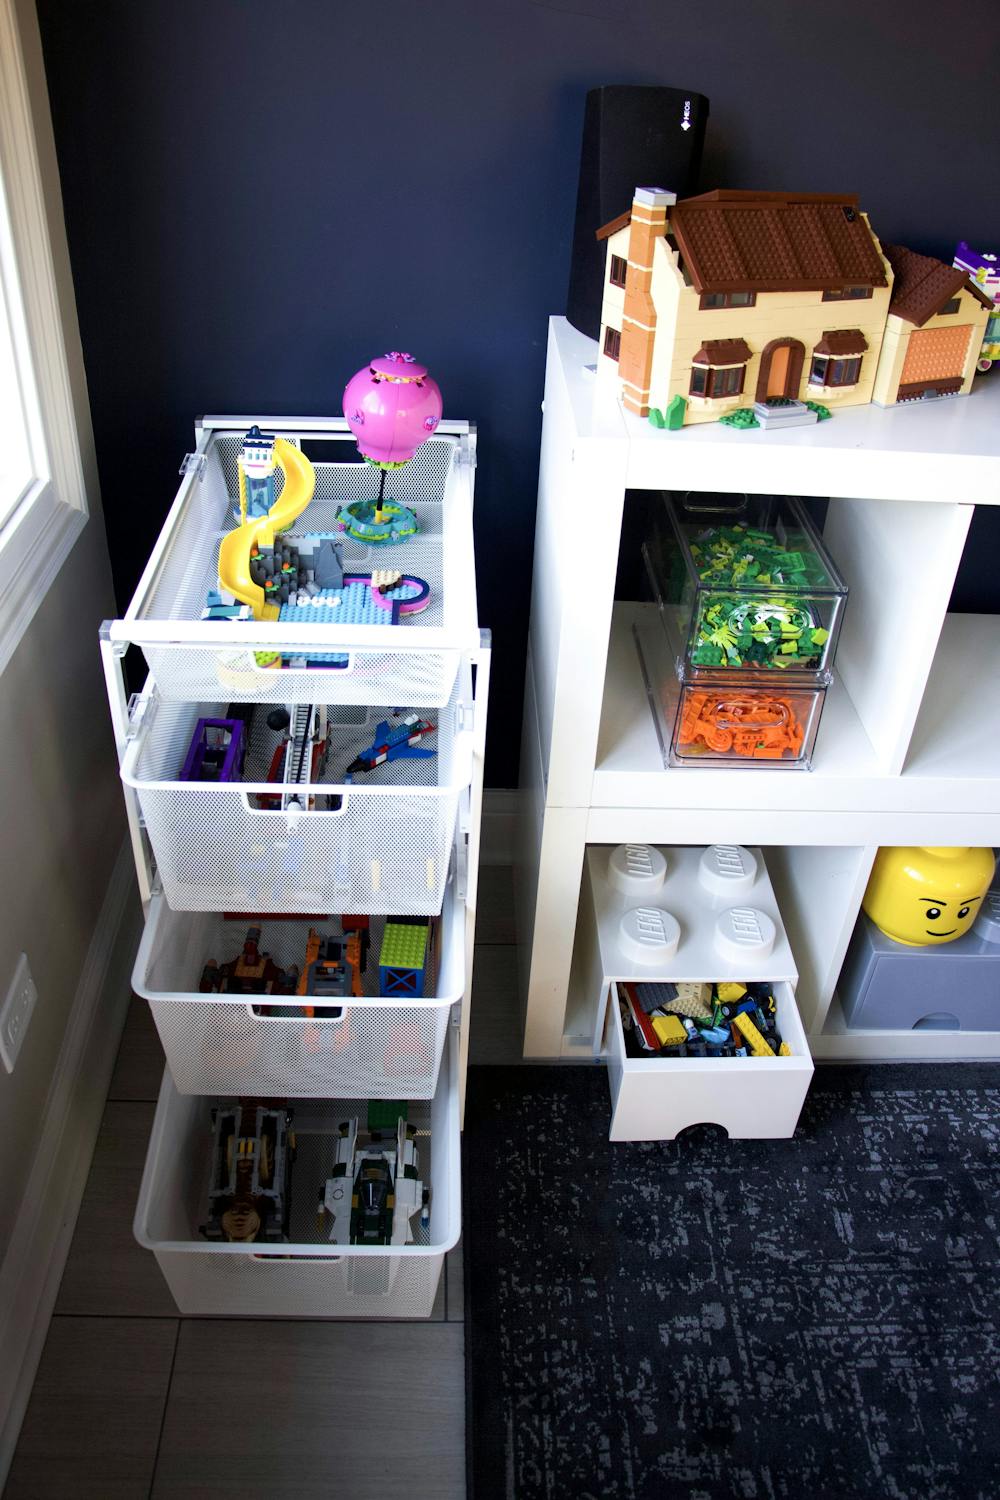 Lego Organization and Storage - A Wonderful Thought